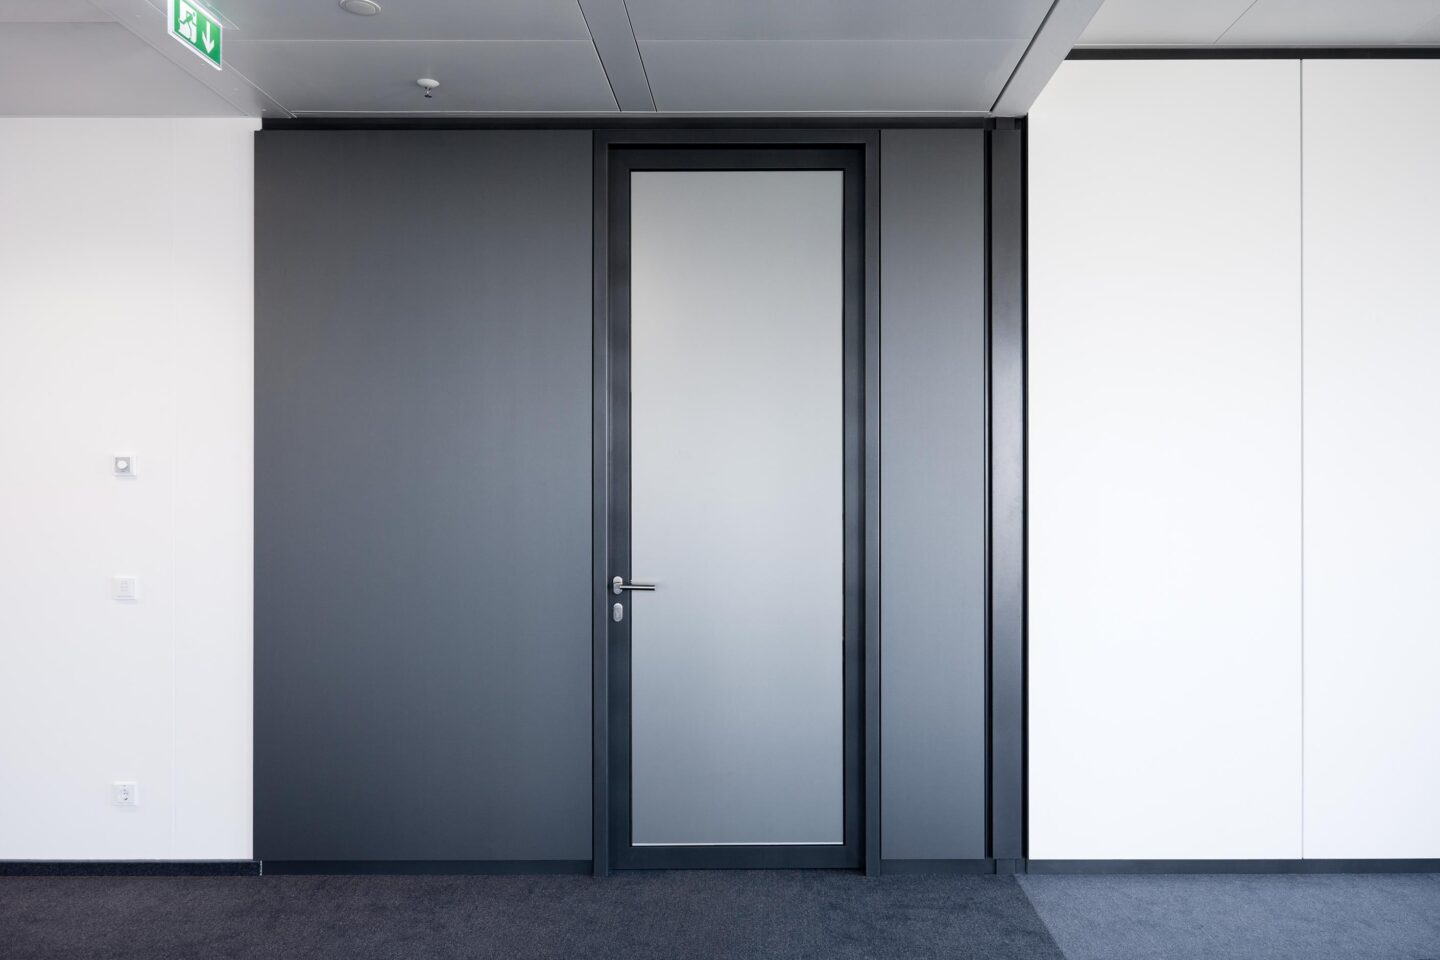 Deutsche Börse headquarters │ glass wall │ meeting rooms